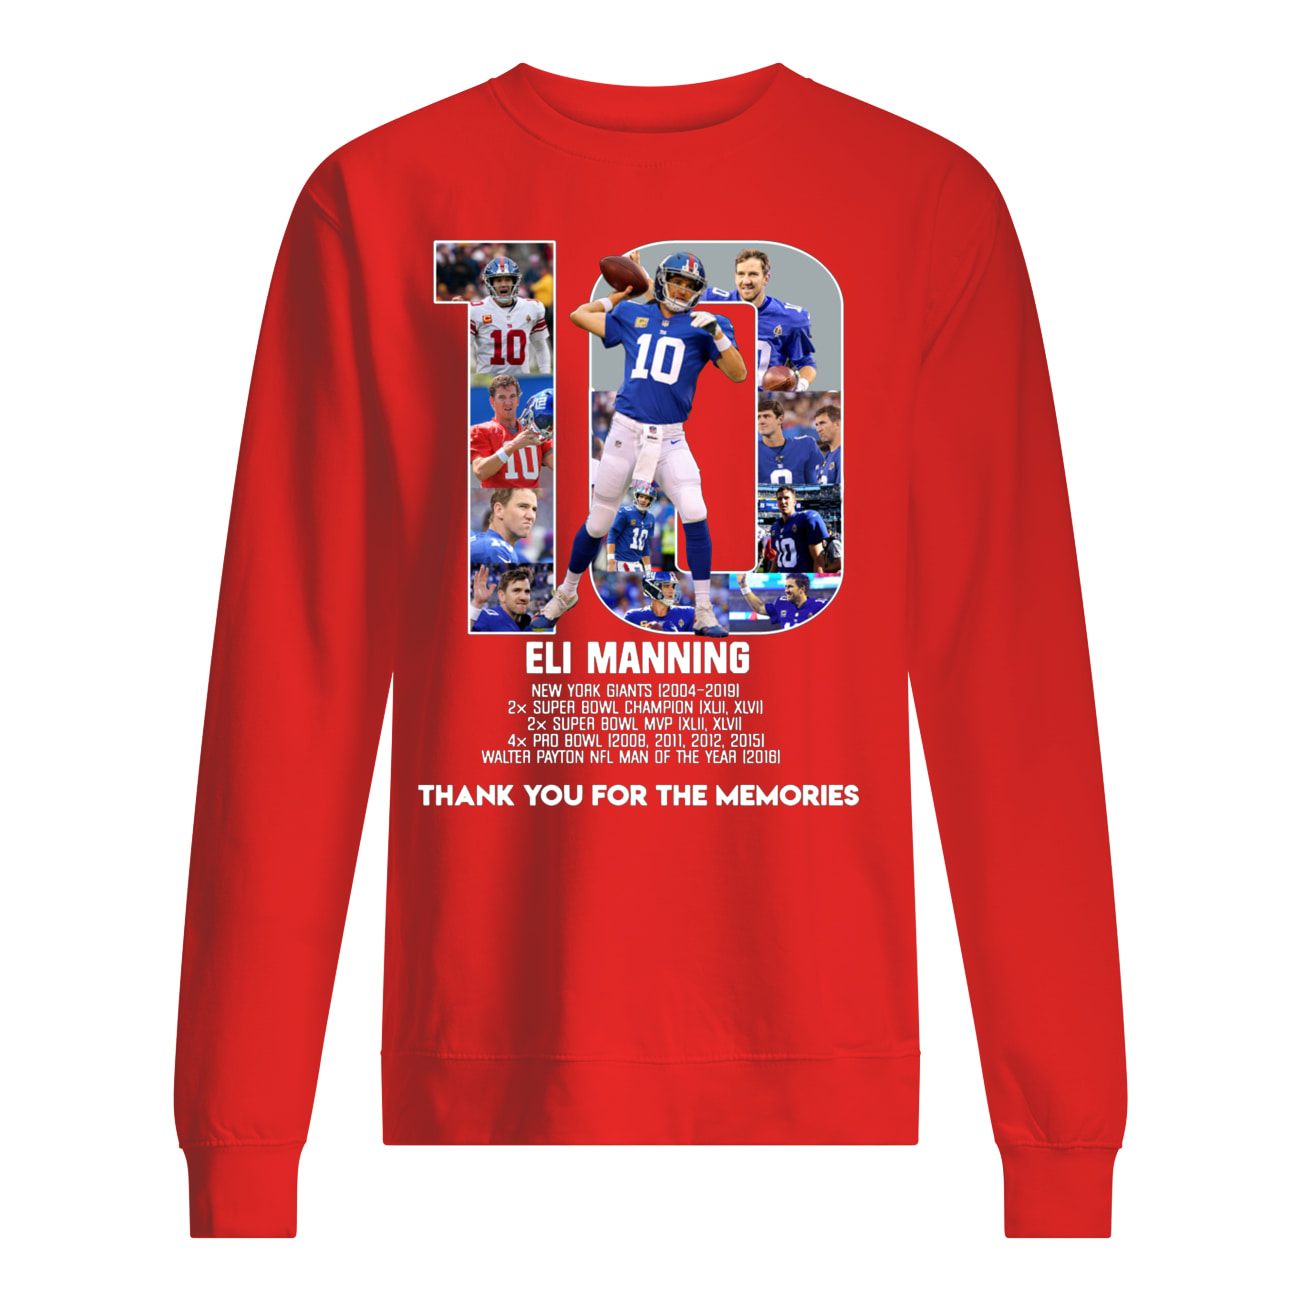 Eli manning 10 new york giants thank for the memories sweatshirt